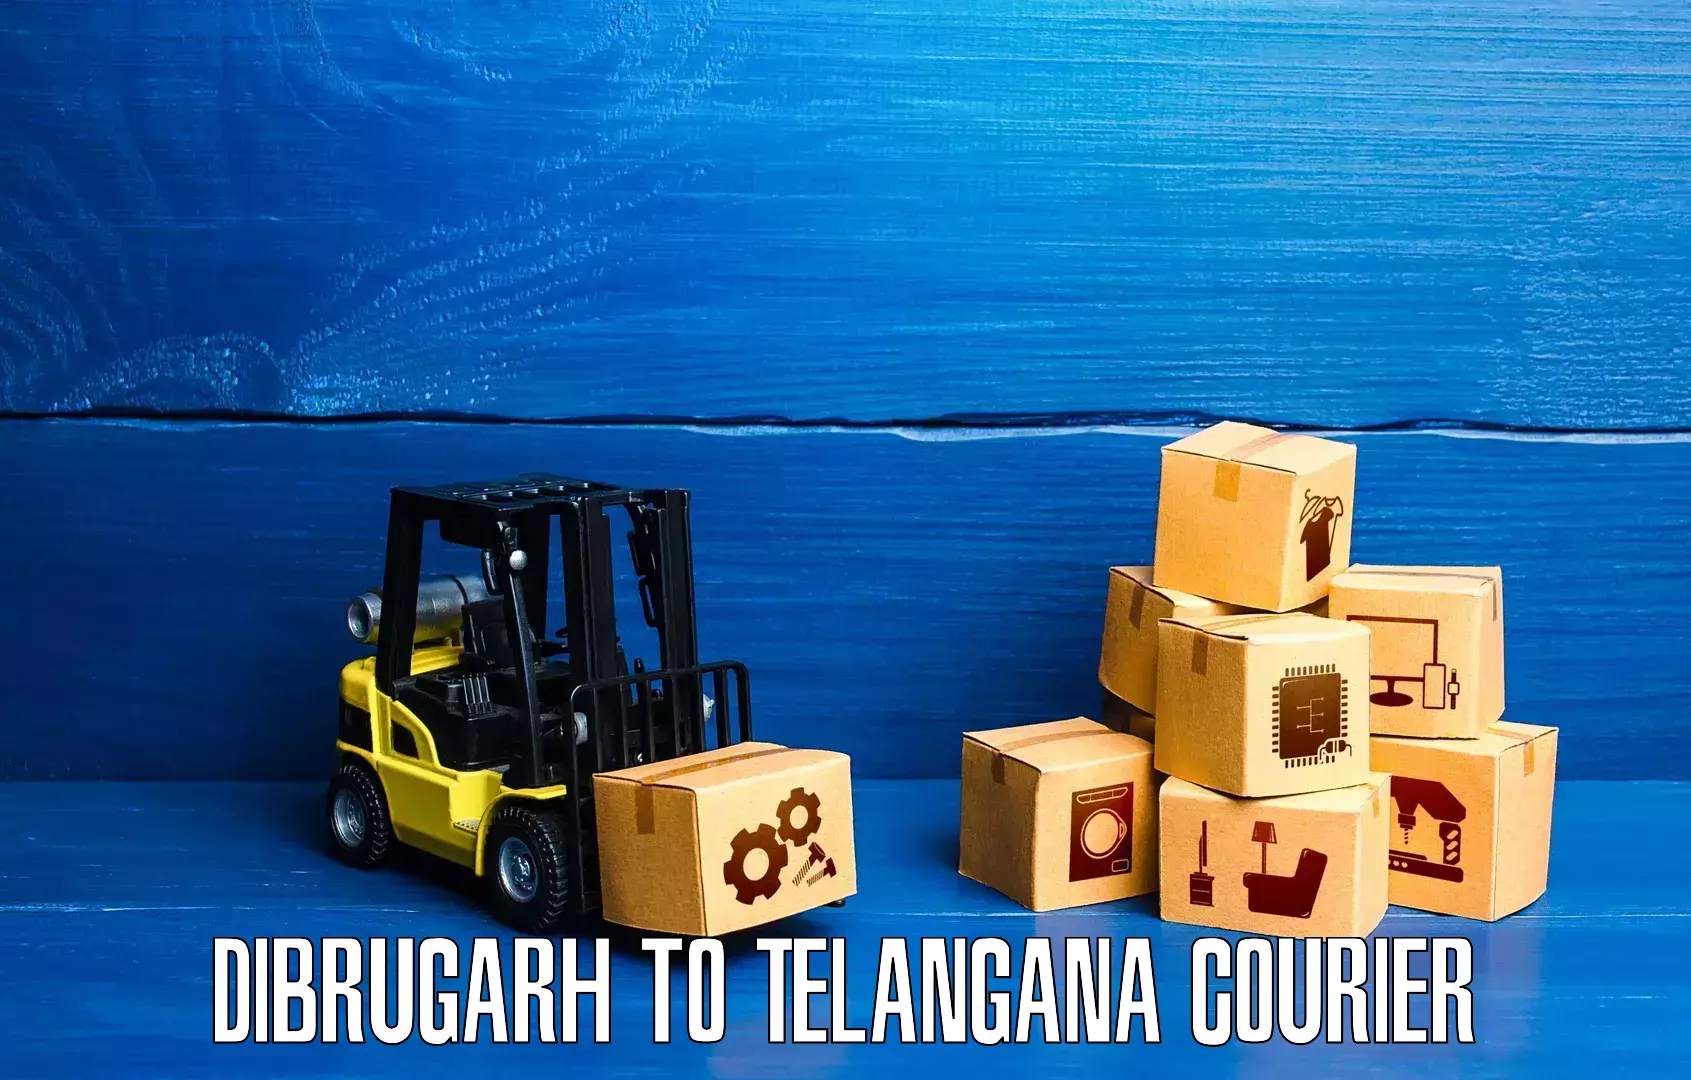 Courier rate comparison Dibrugarh to Bhuvanagiri